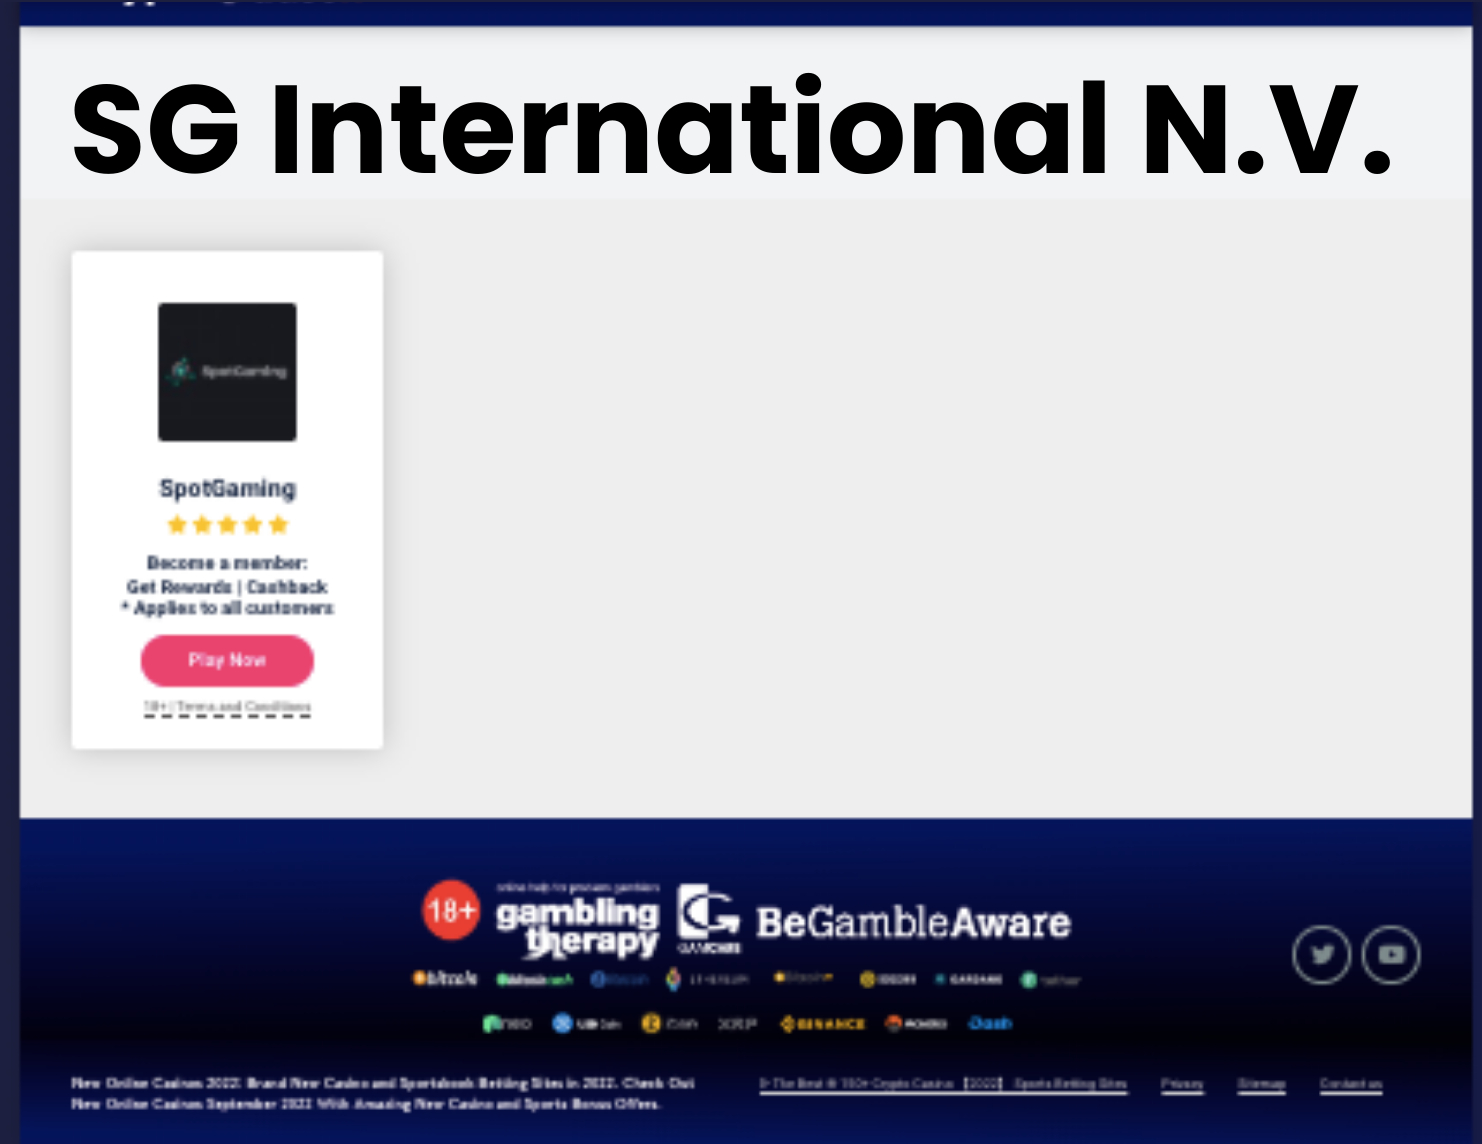 SG International N.V. Casino Owned Operated